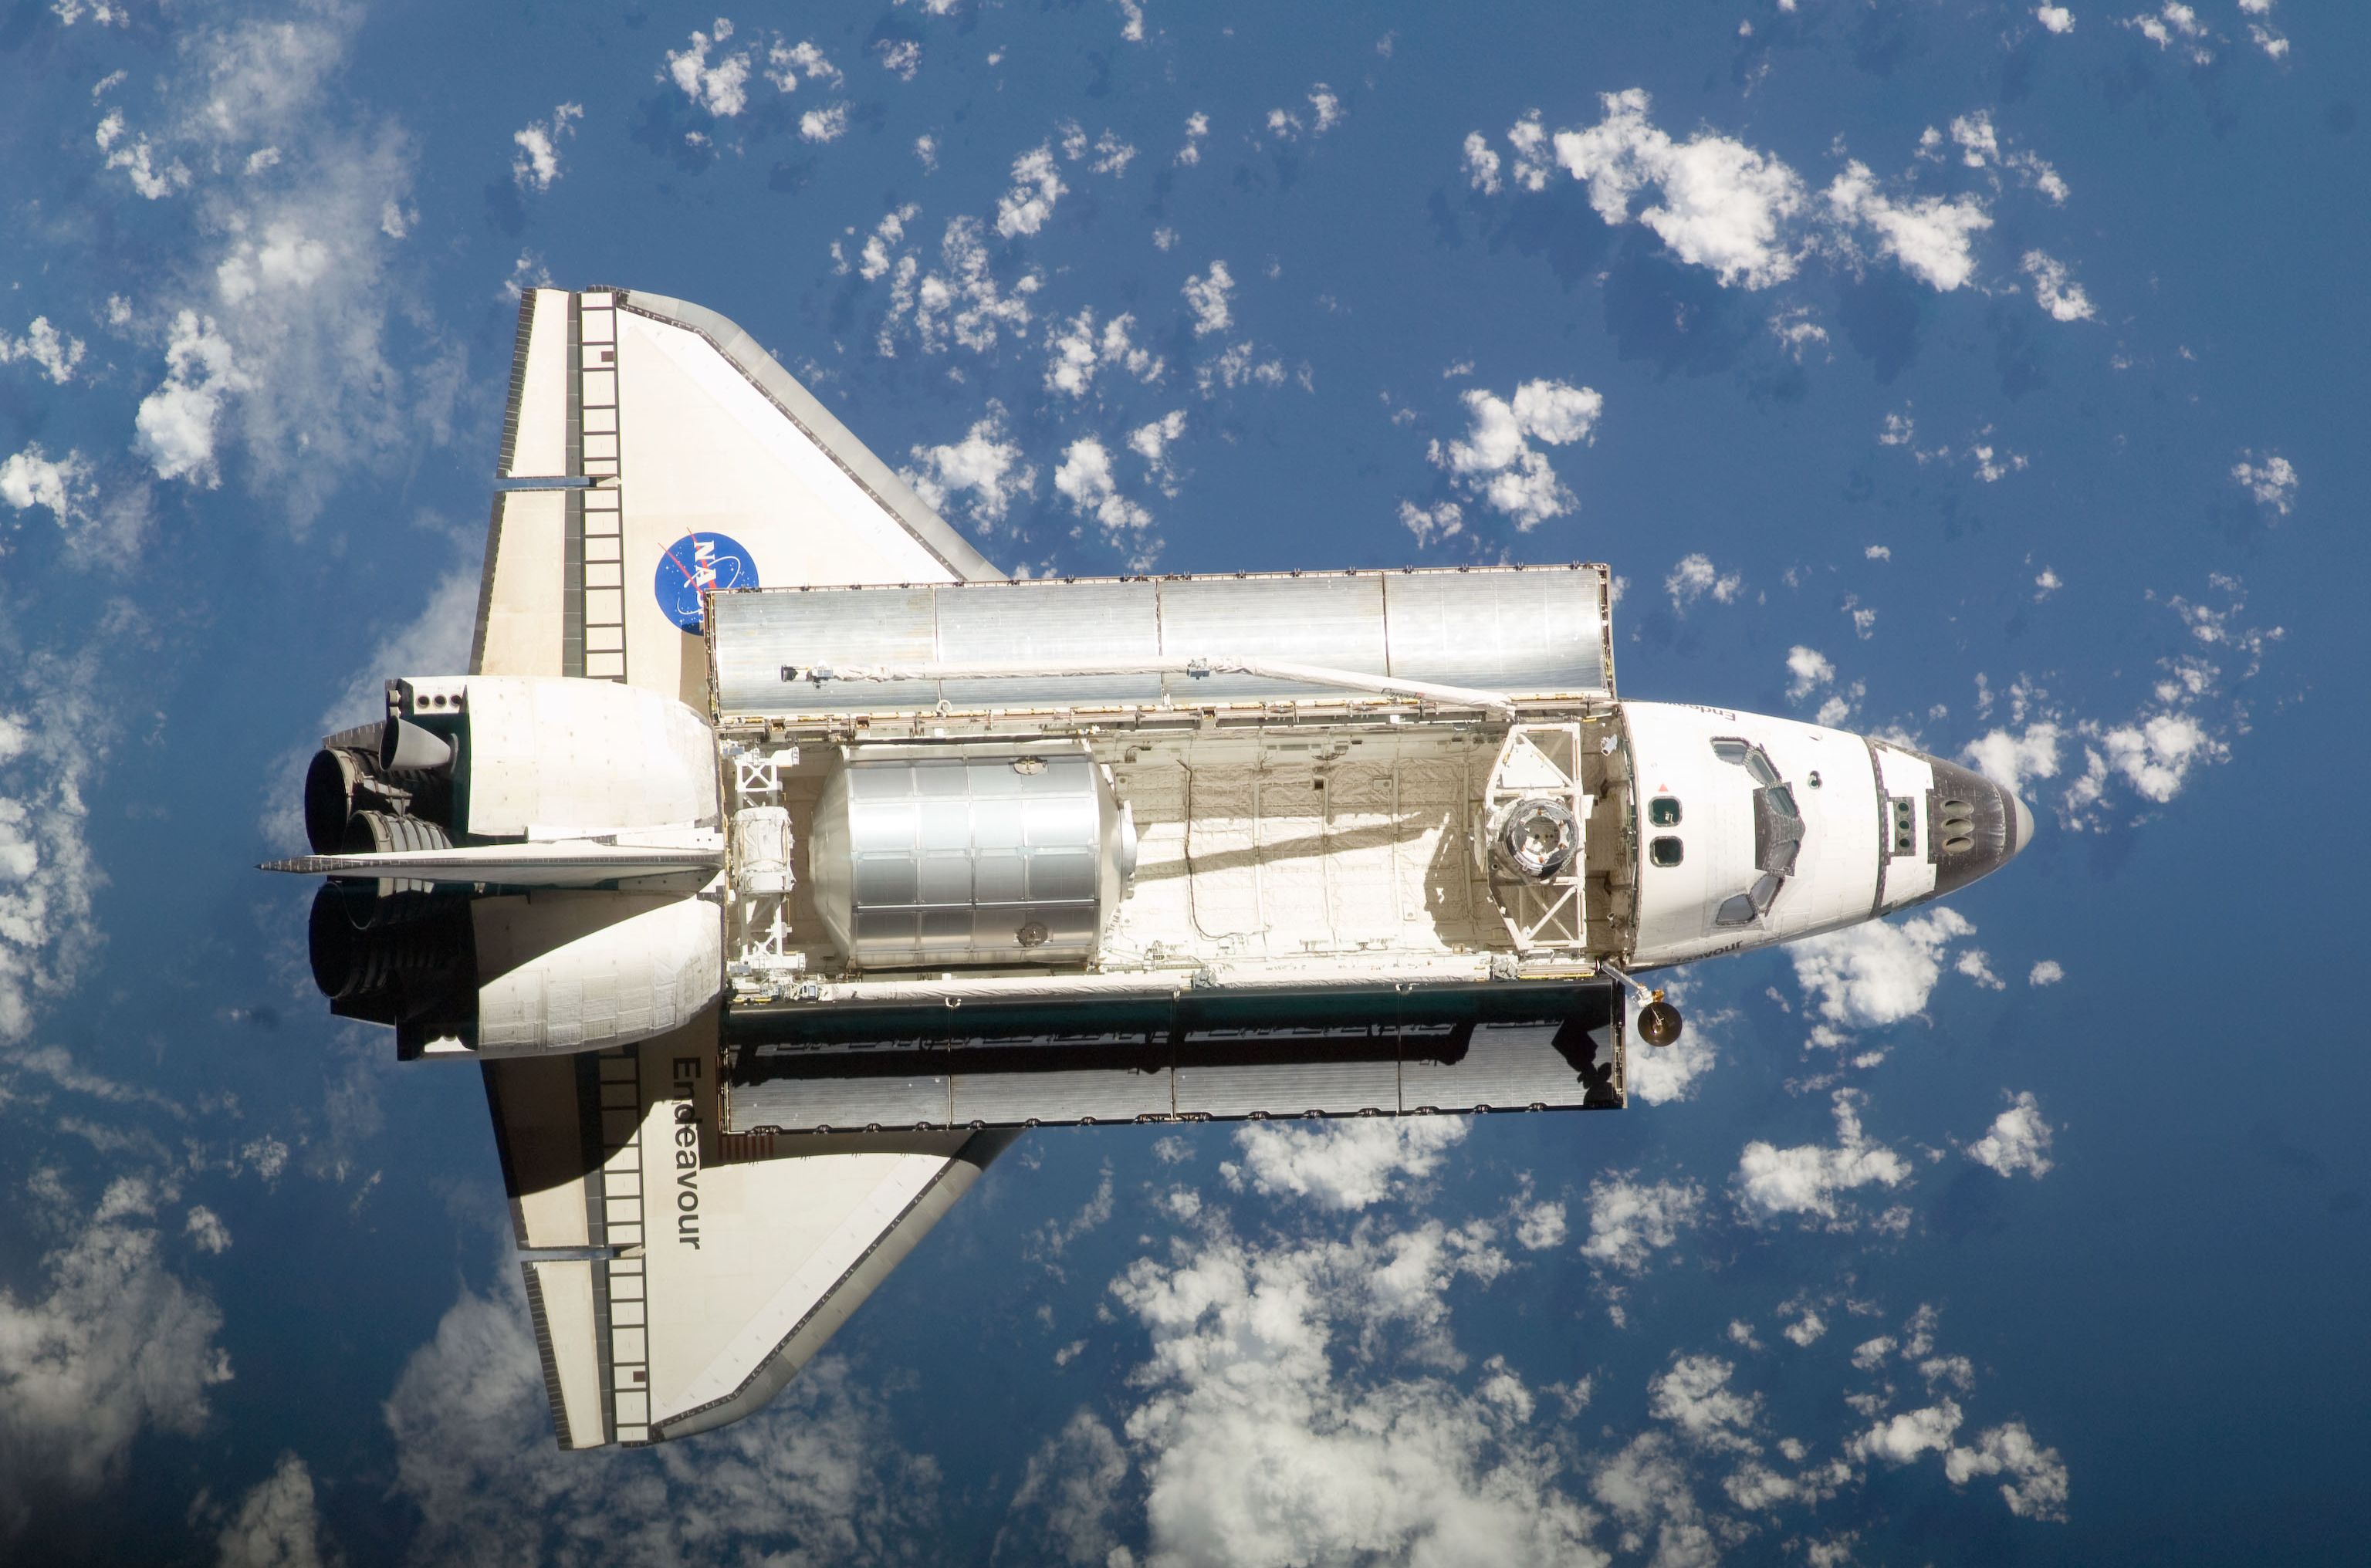 Space-Shuttle-Endeavour-16.jpg